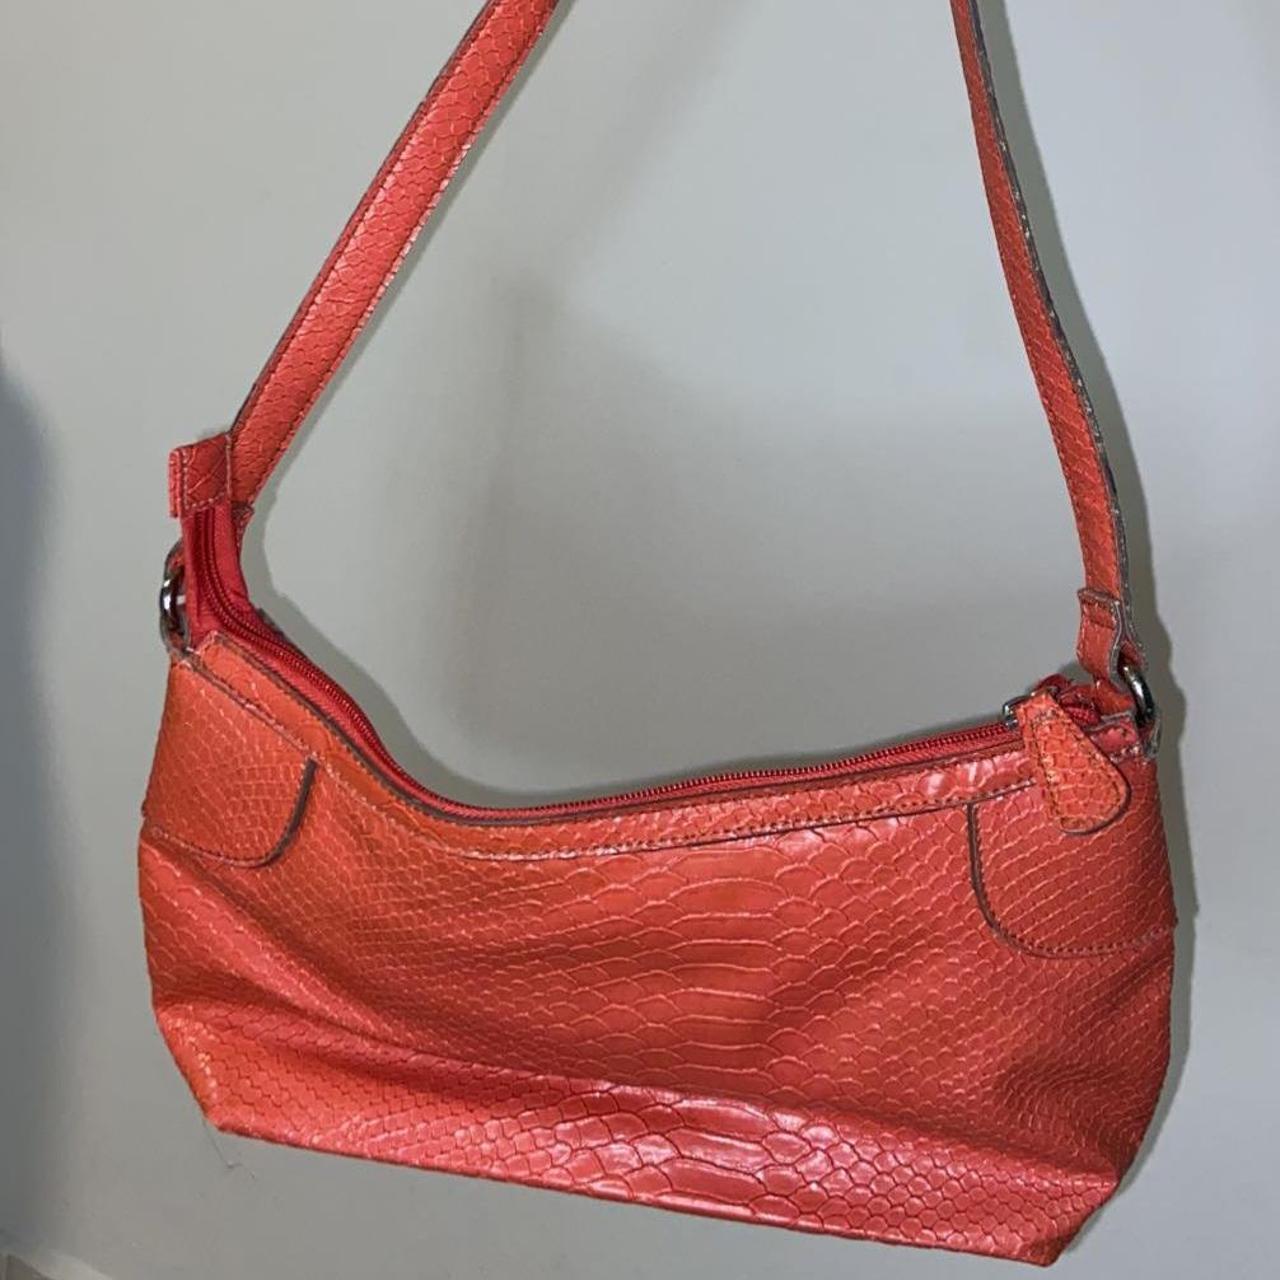 Jaclyn Smith Faux Leather Taupe Crossbody Handbag Purse | eBay